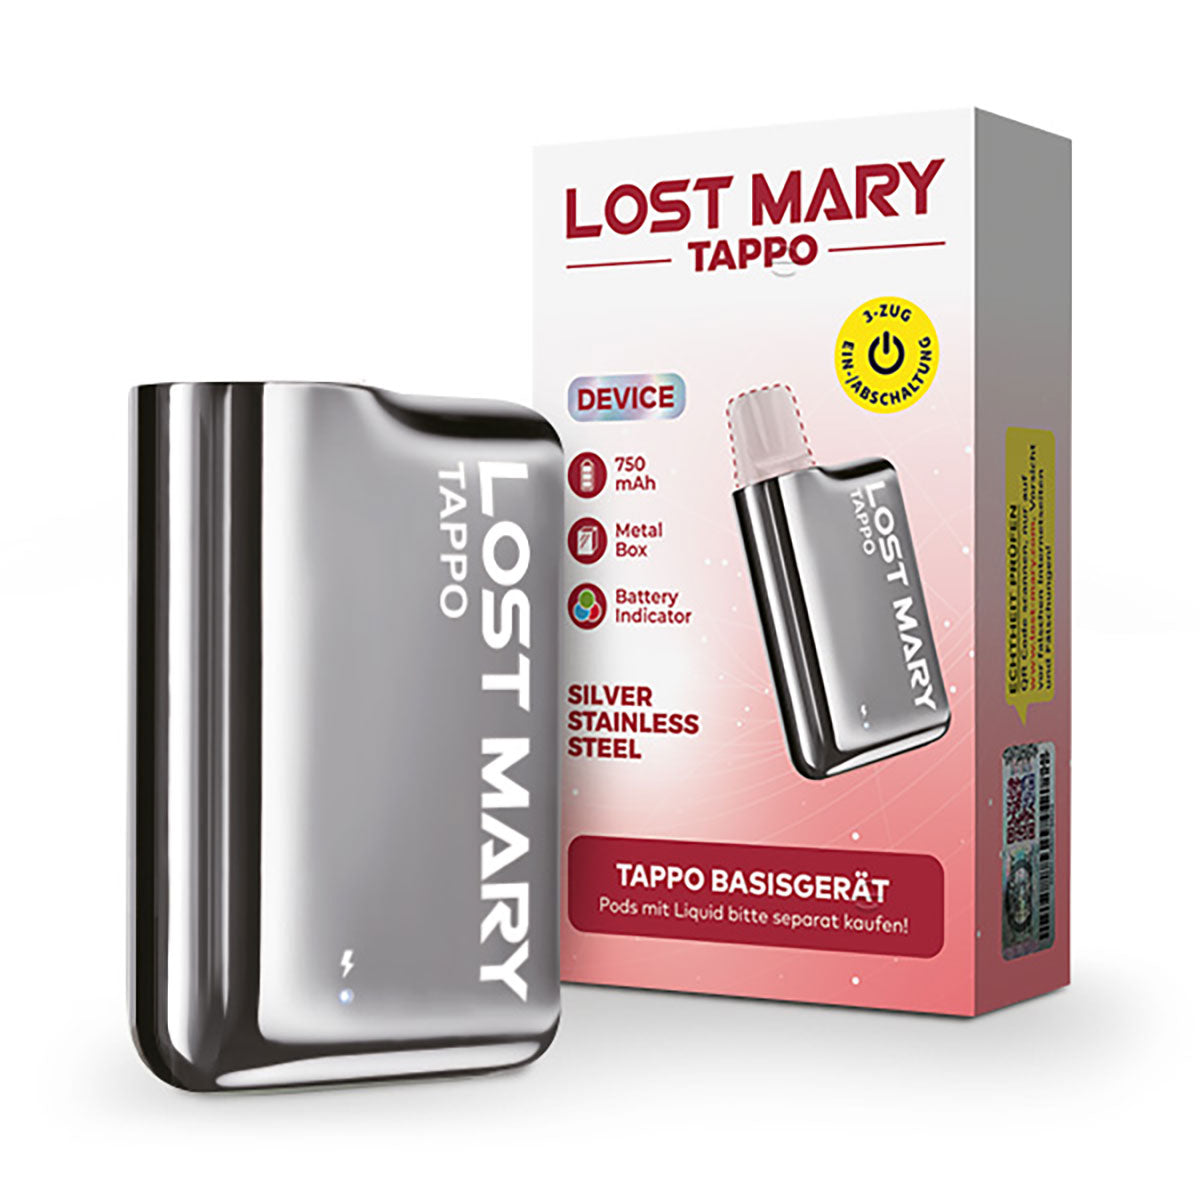 Lost Mary Tappo Akkuträger / Basisgerät